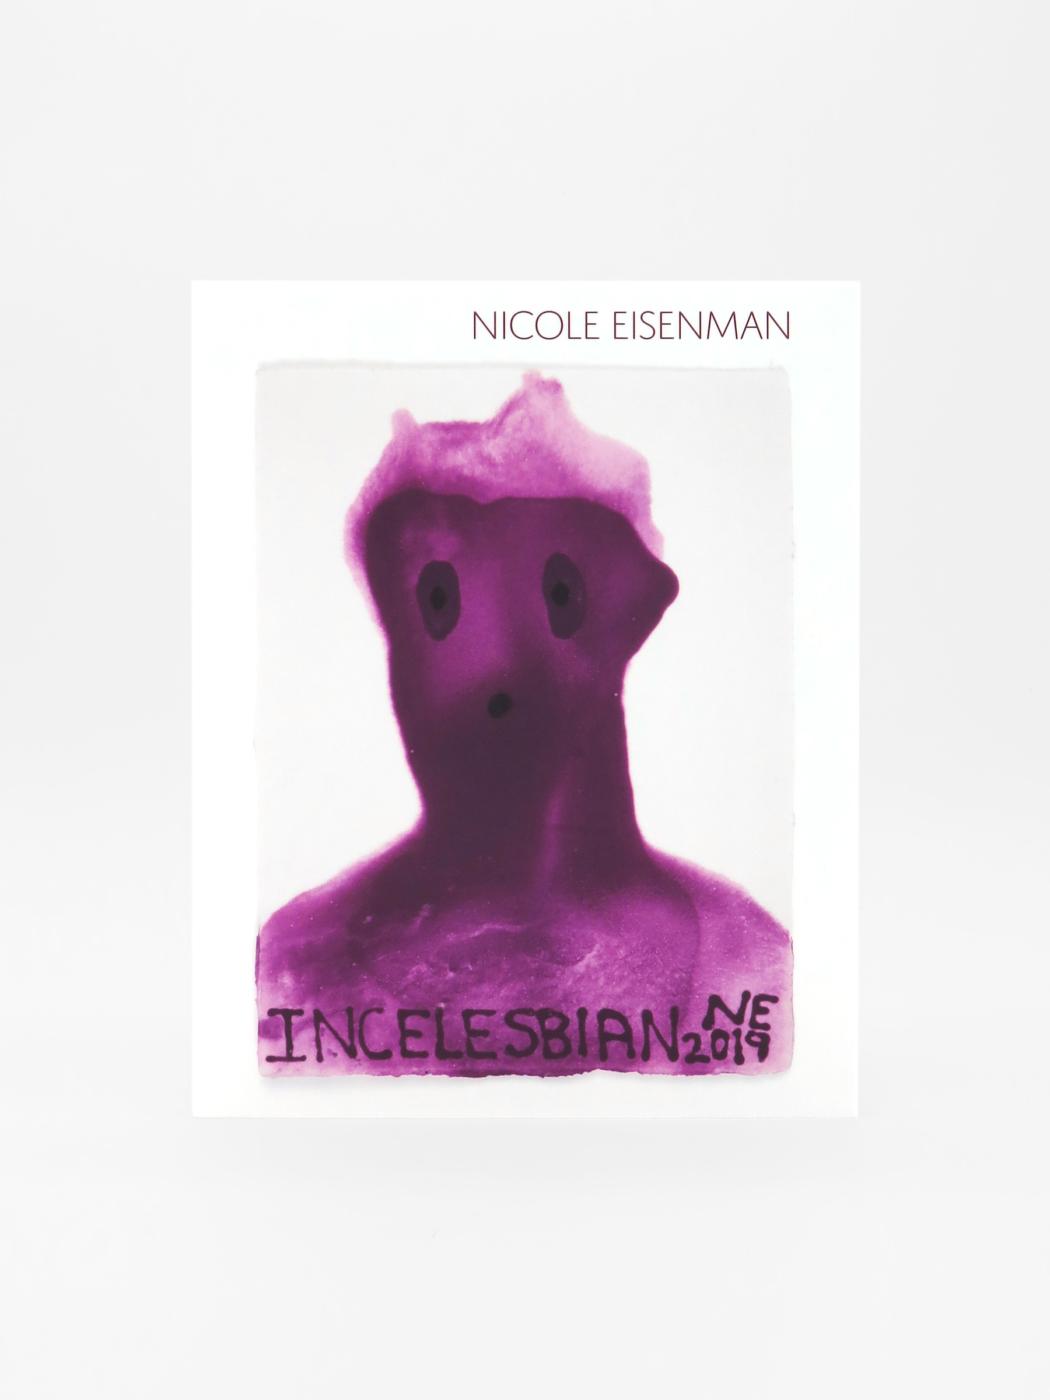 Nicole Eisenman, Incelesbian